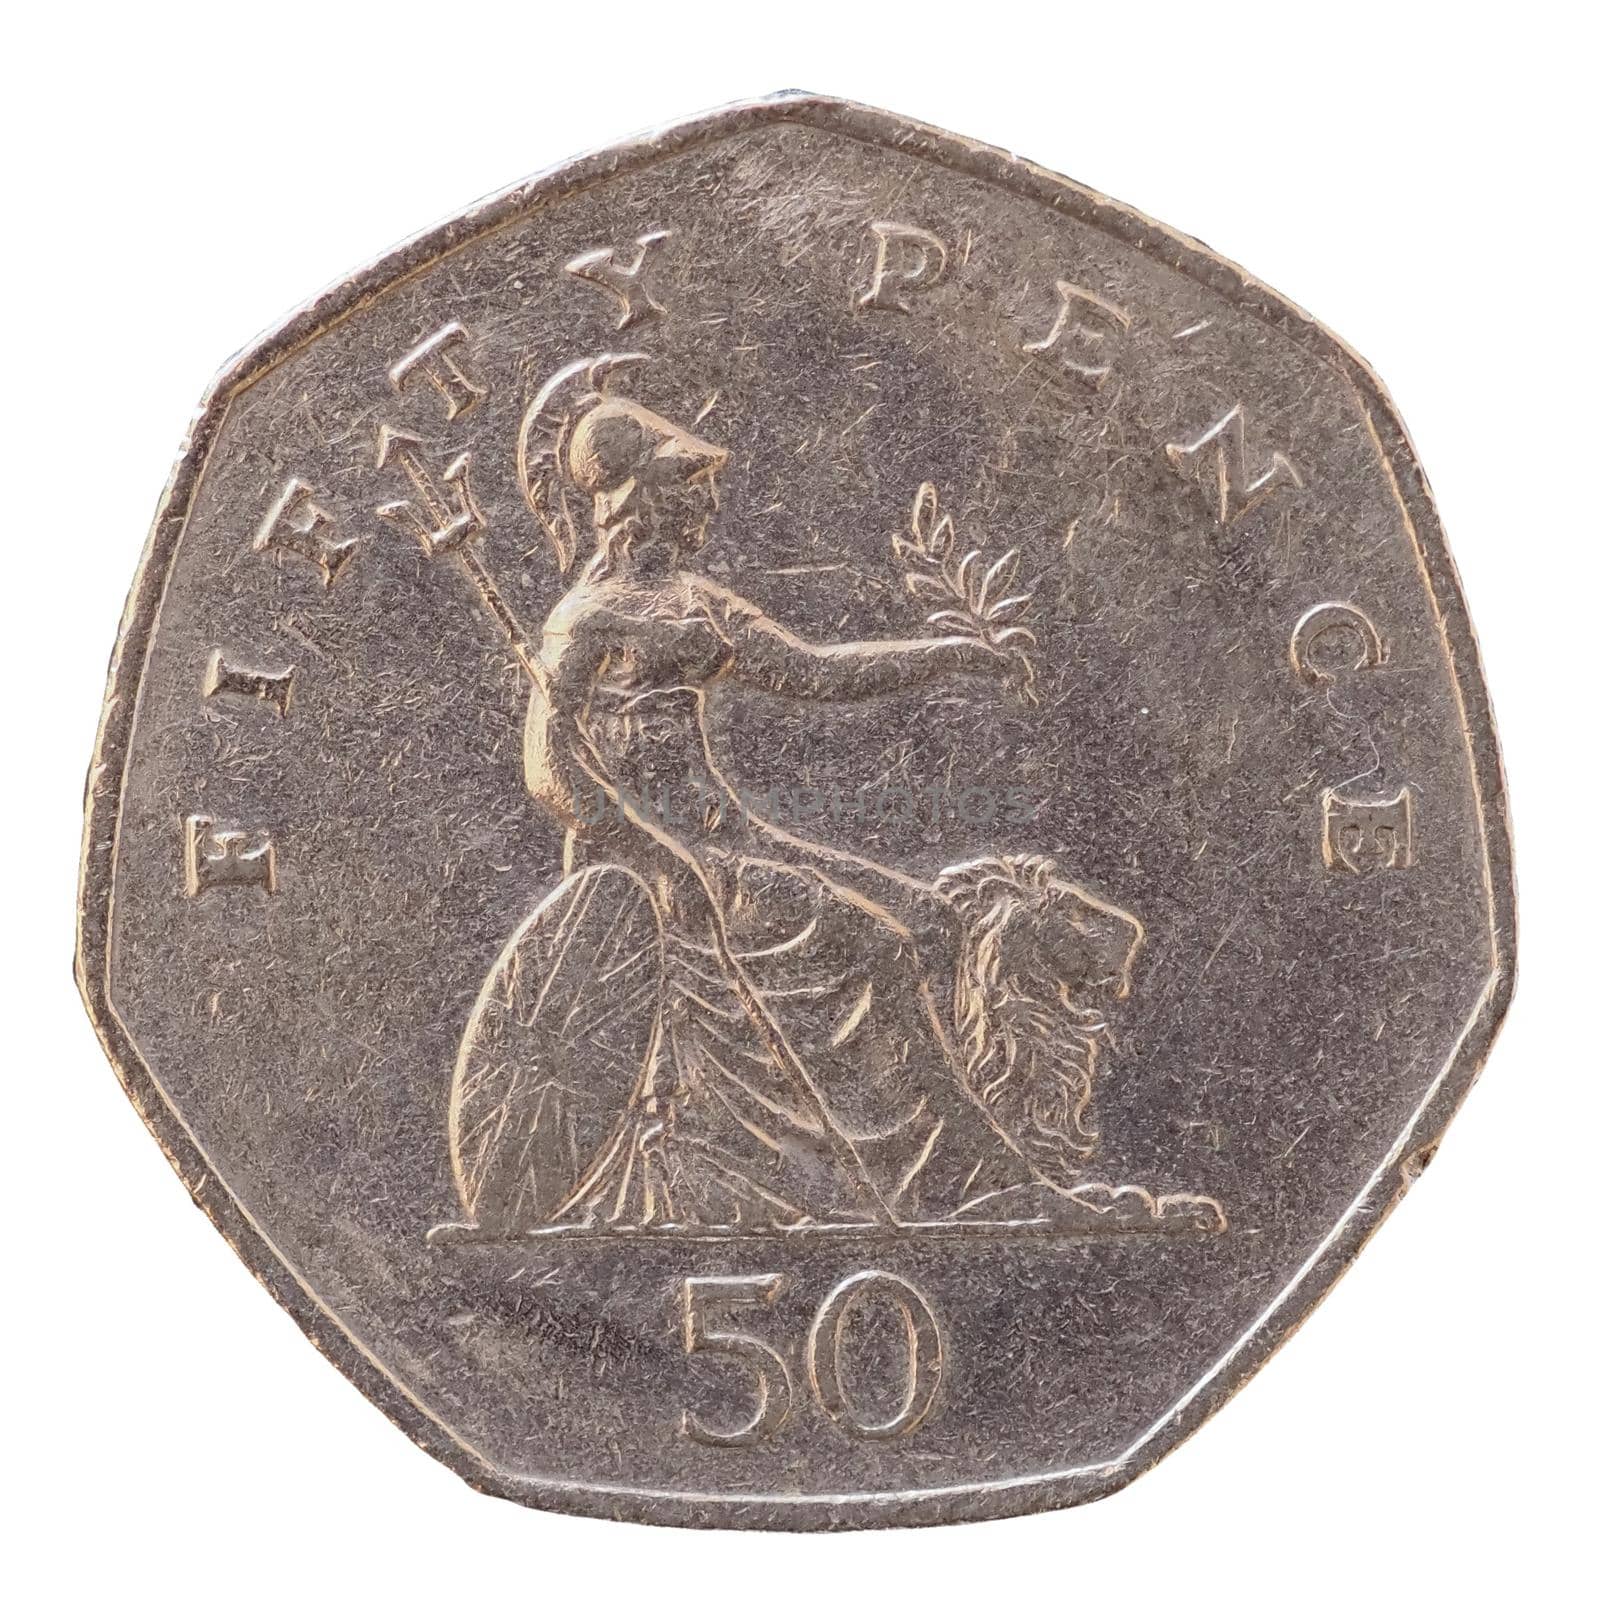 50 pence coin, United Kingdom by claudiodivizia